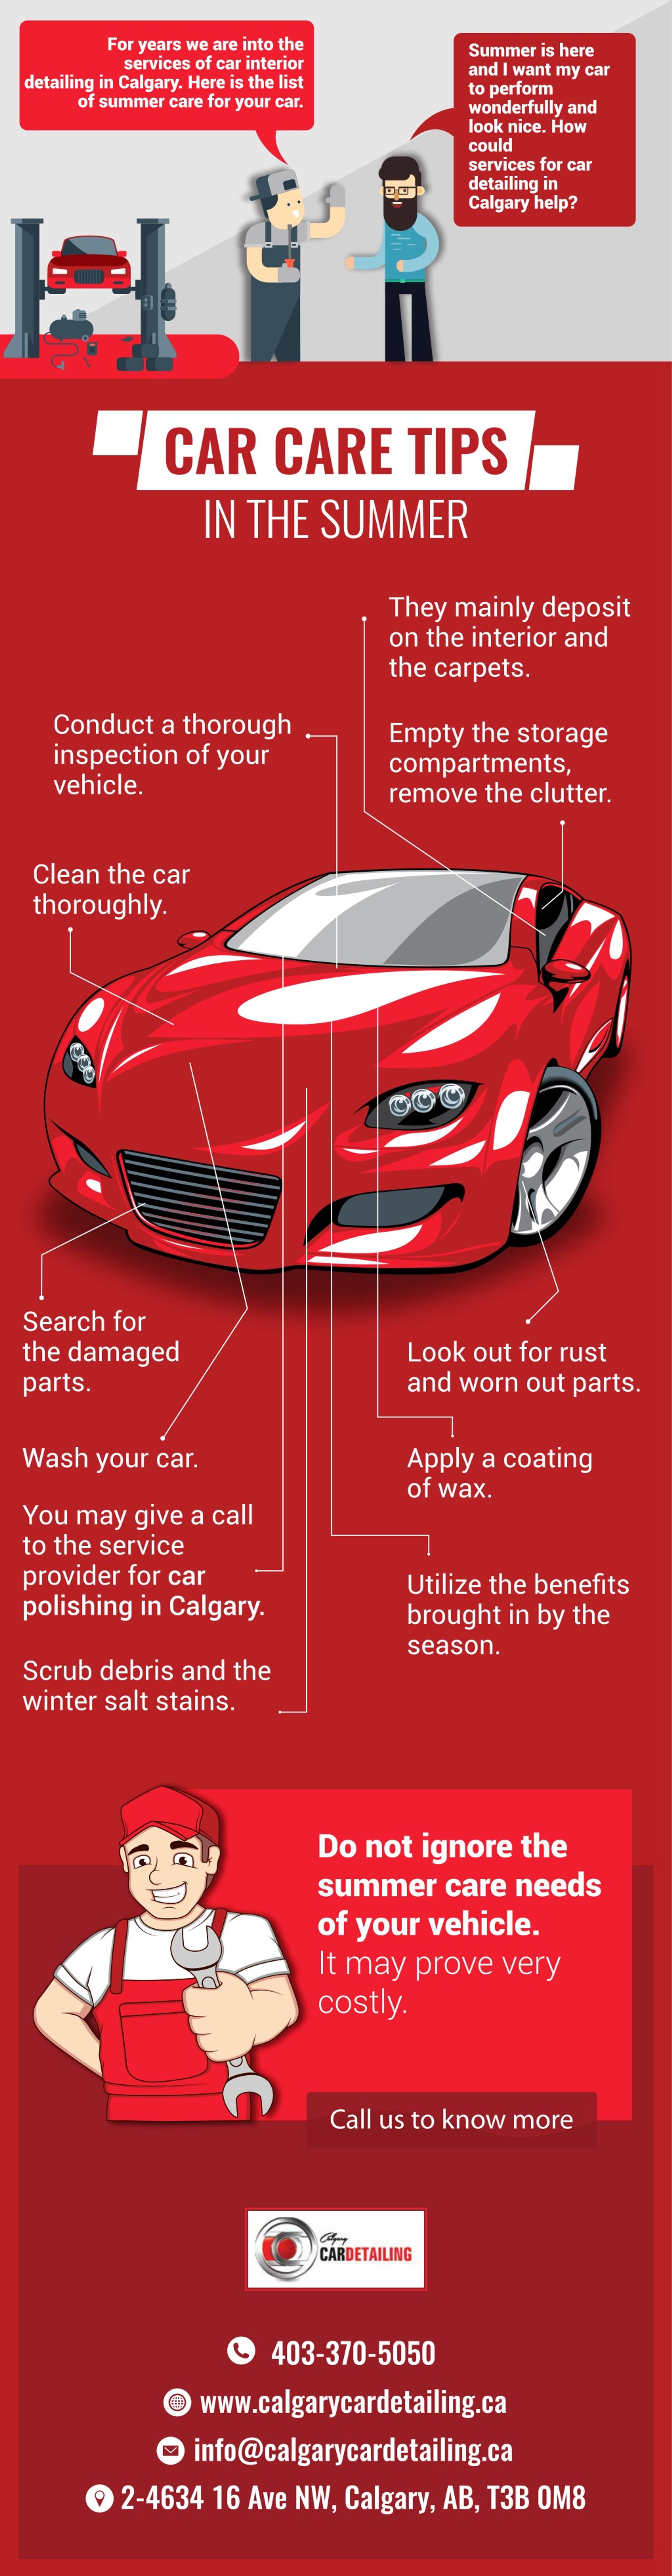 Car Care Tips